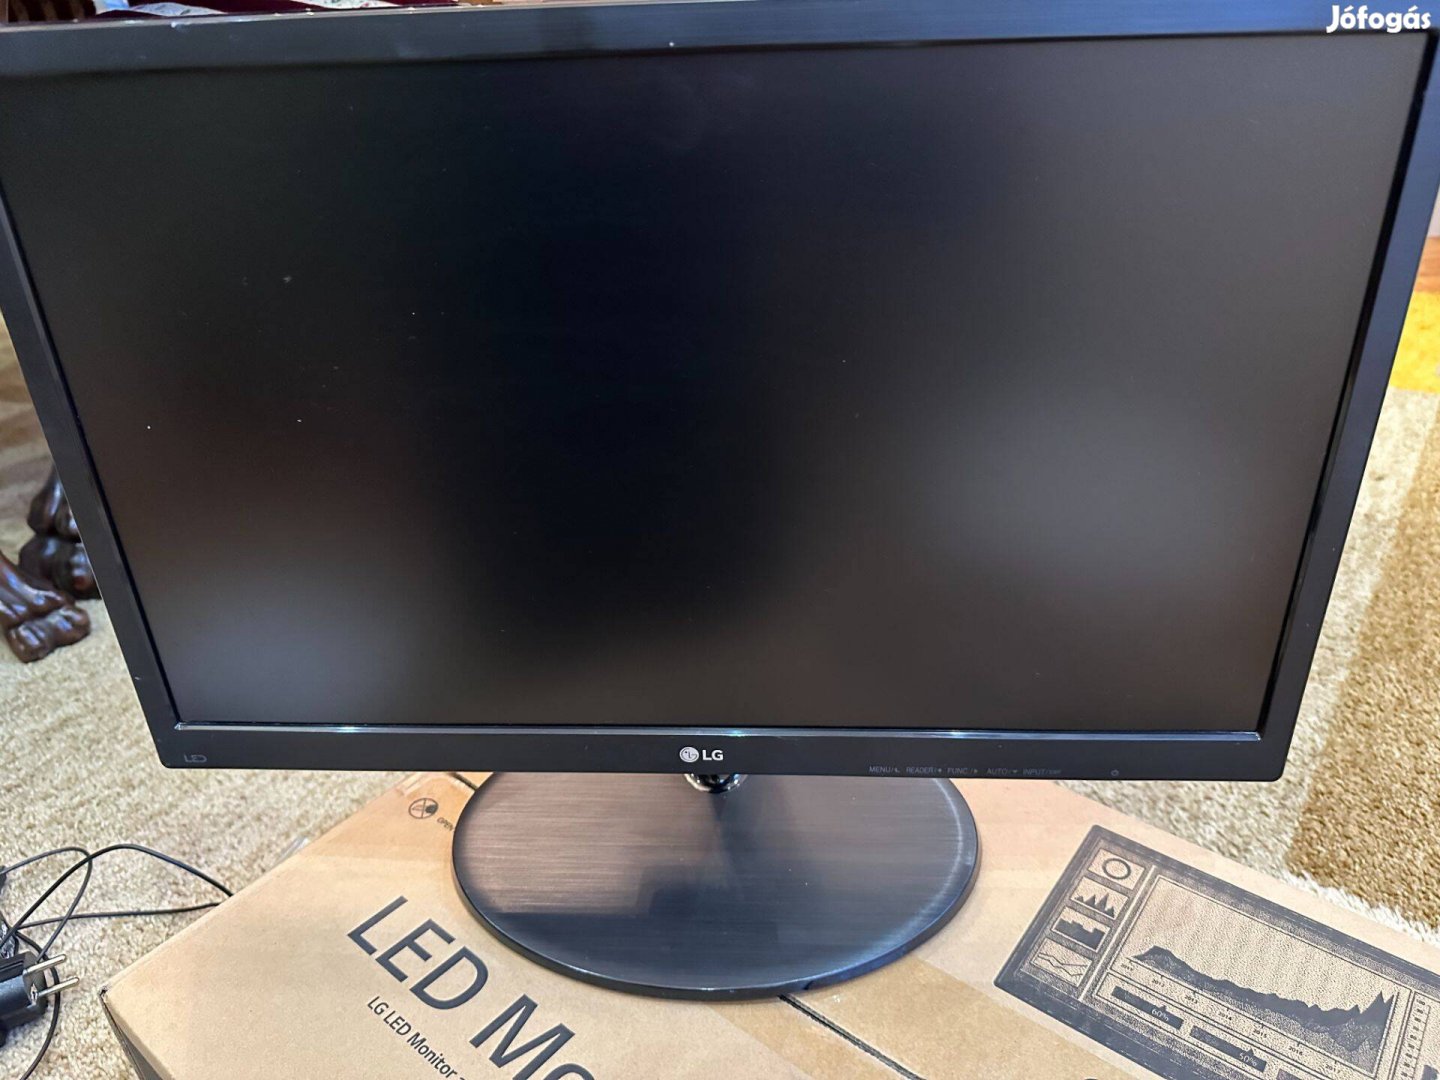 Eladó hibátlan LG LED Full HD monitor 55 cm/22 M38